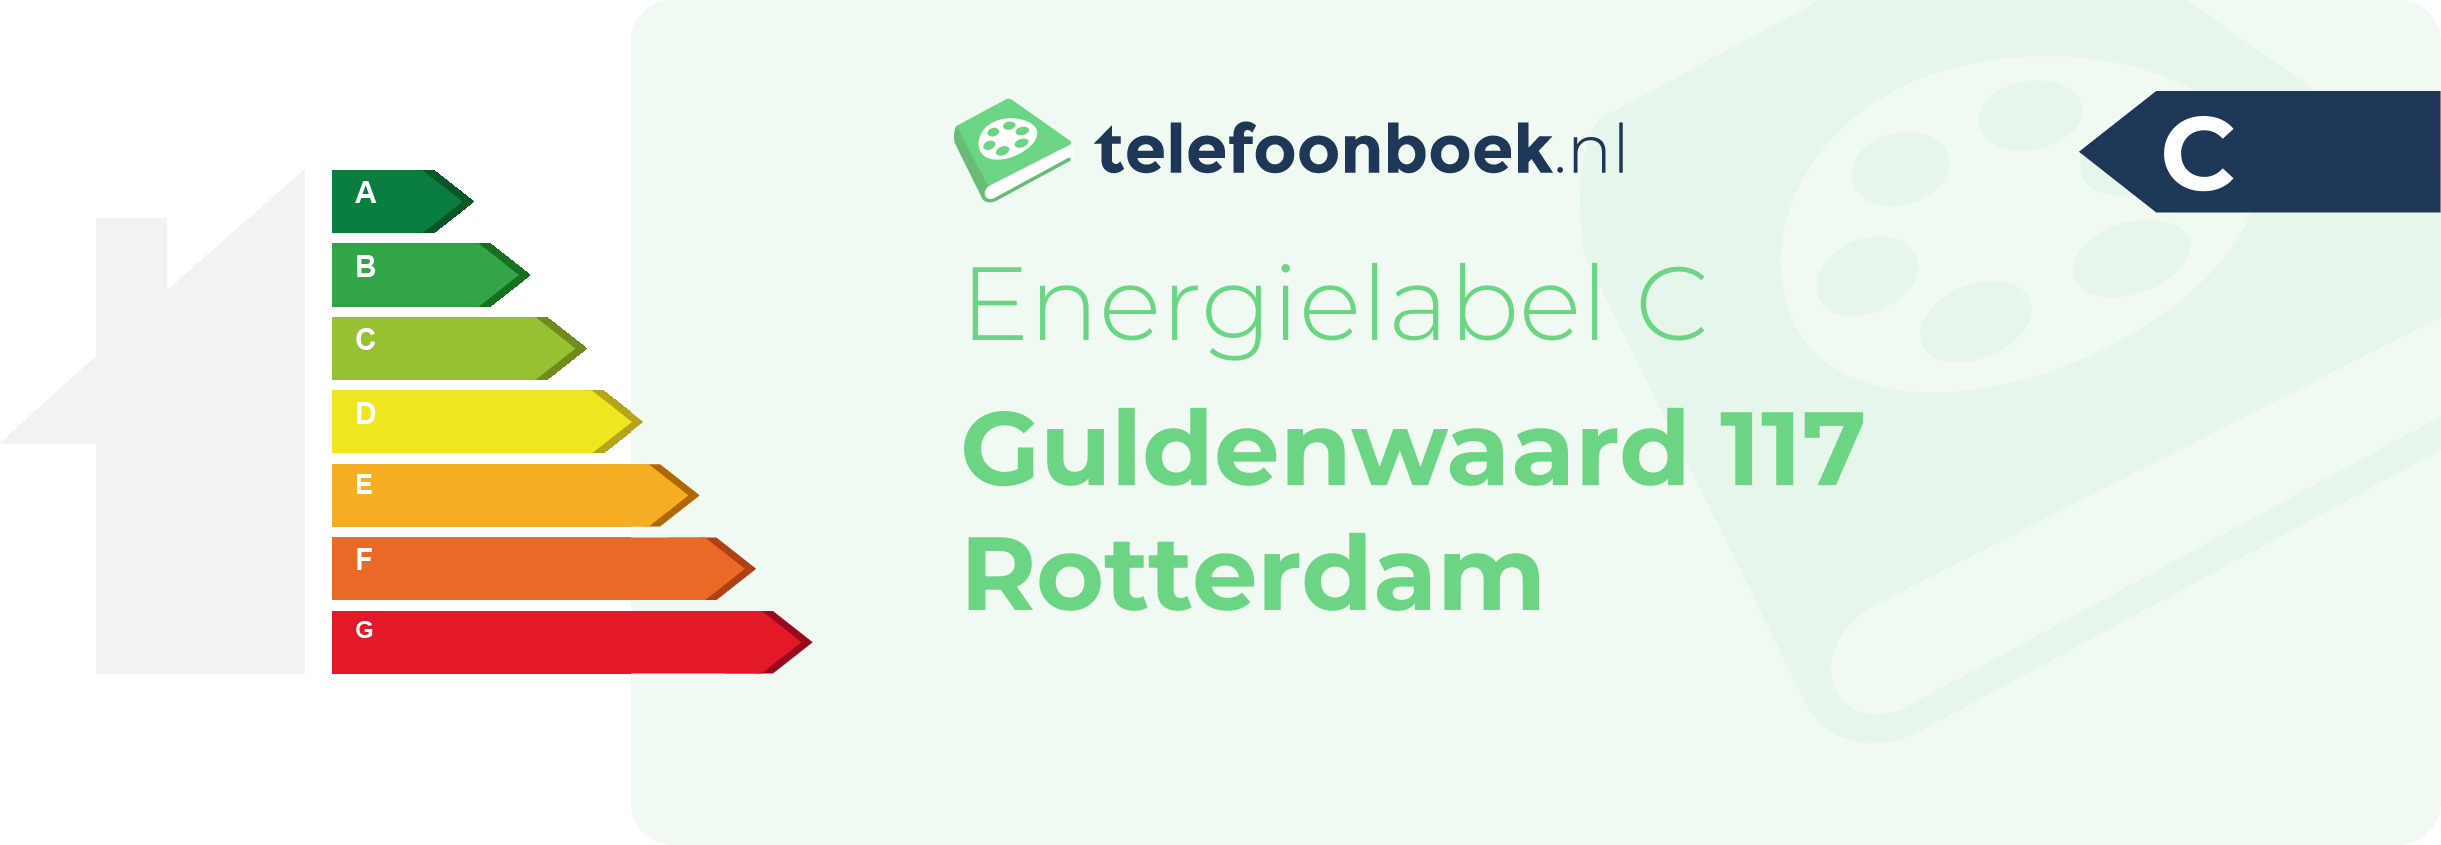 Energielabel Guldenwaard 117 Rotterdam